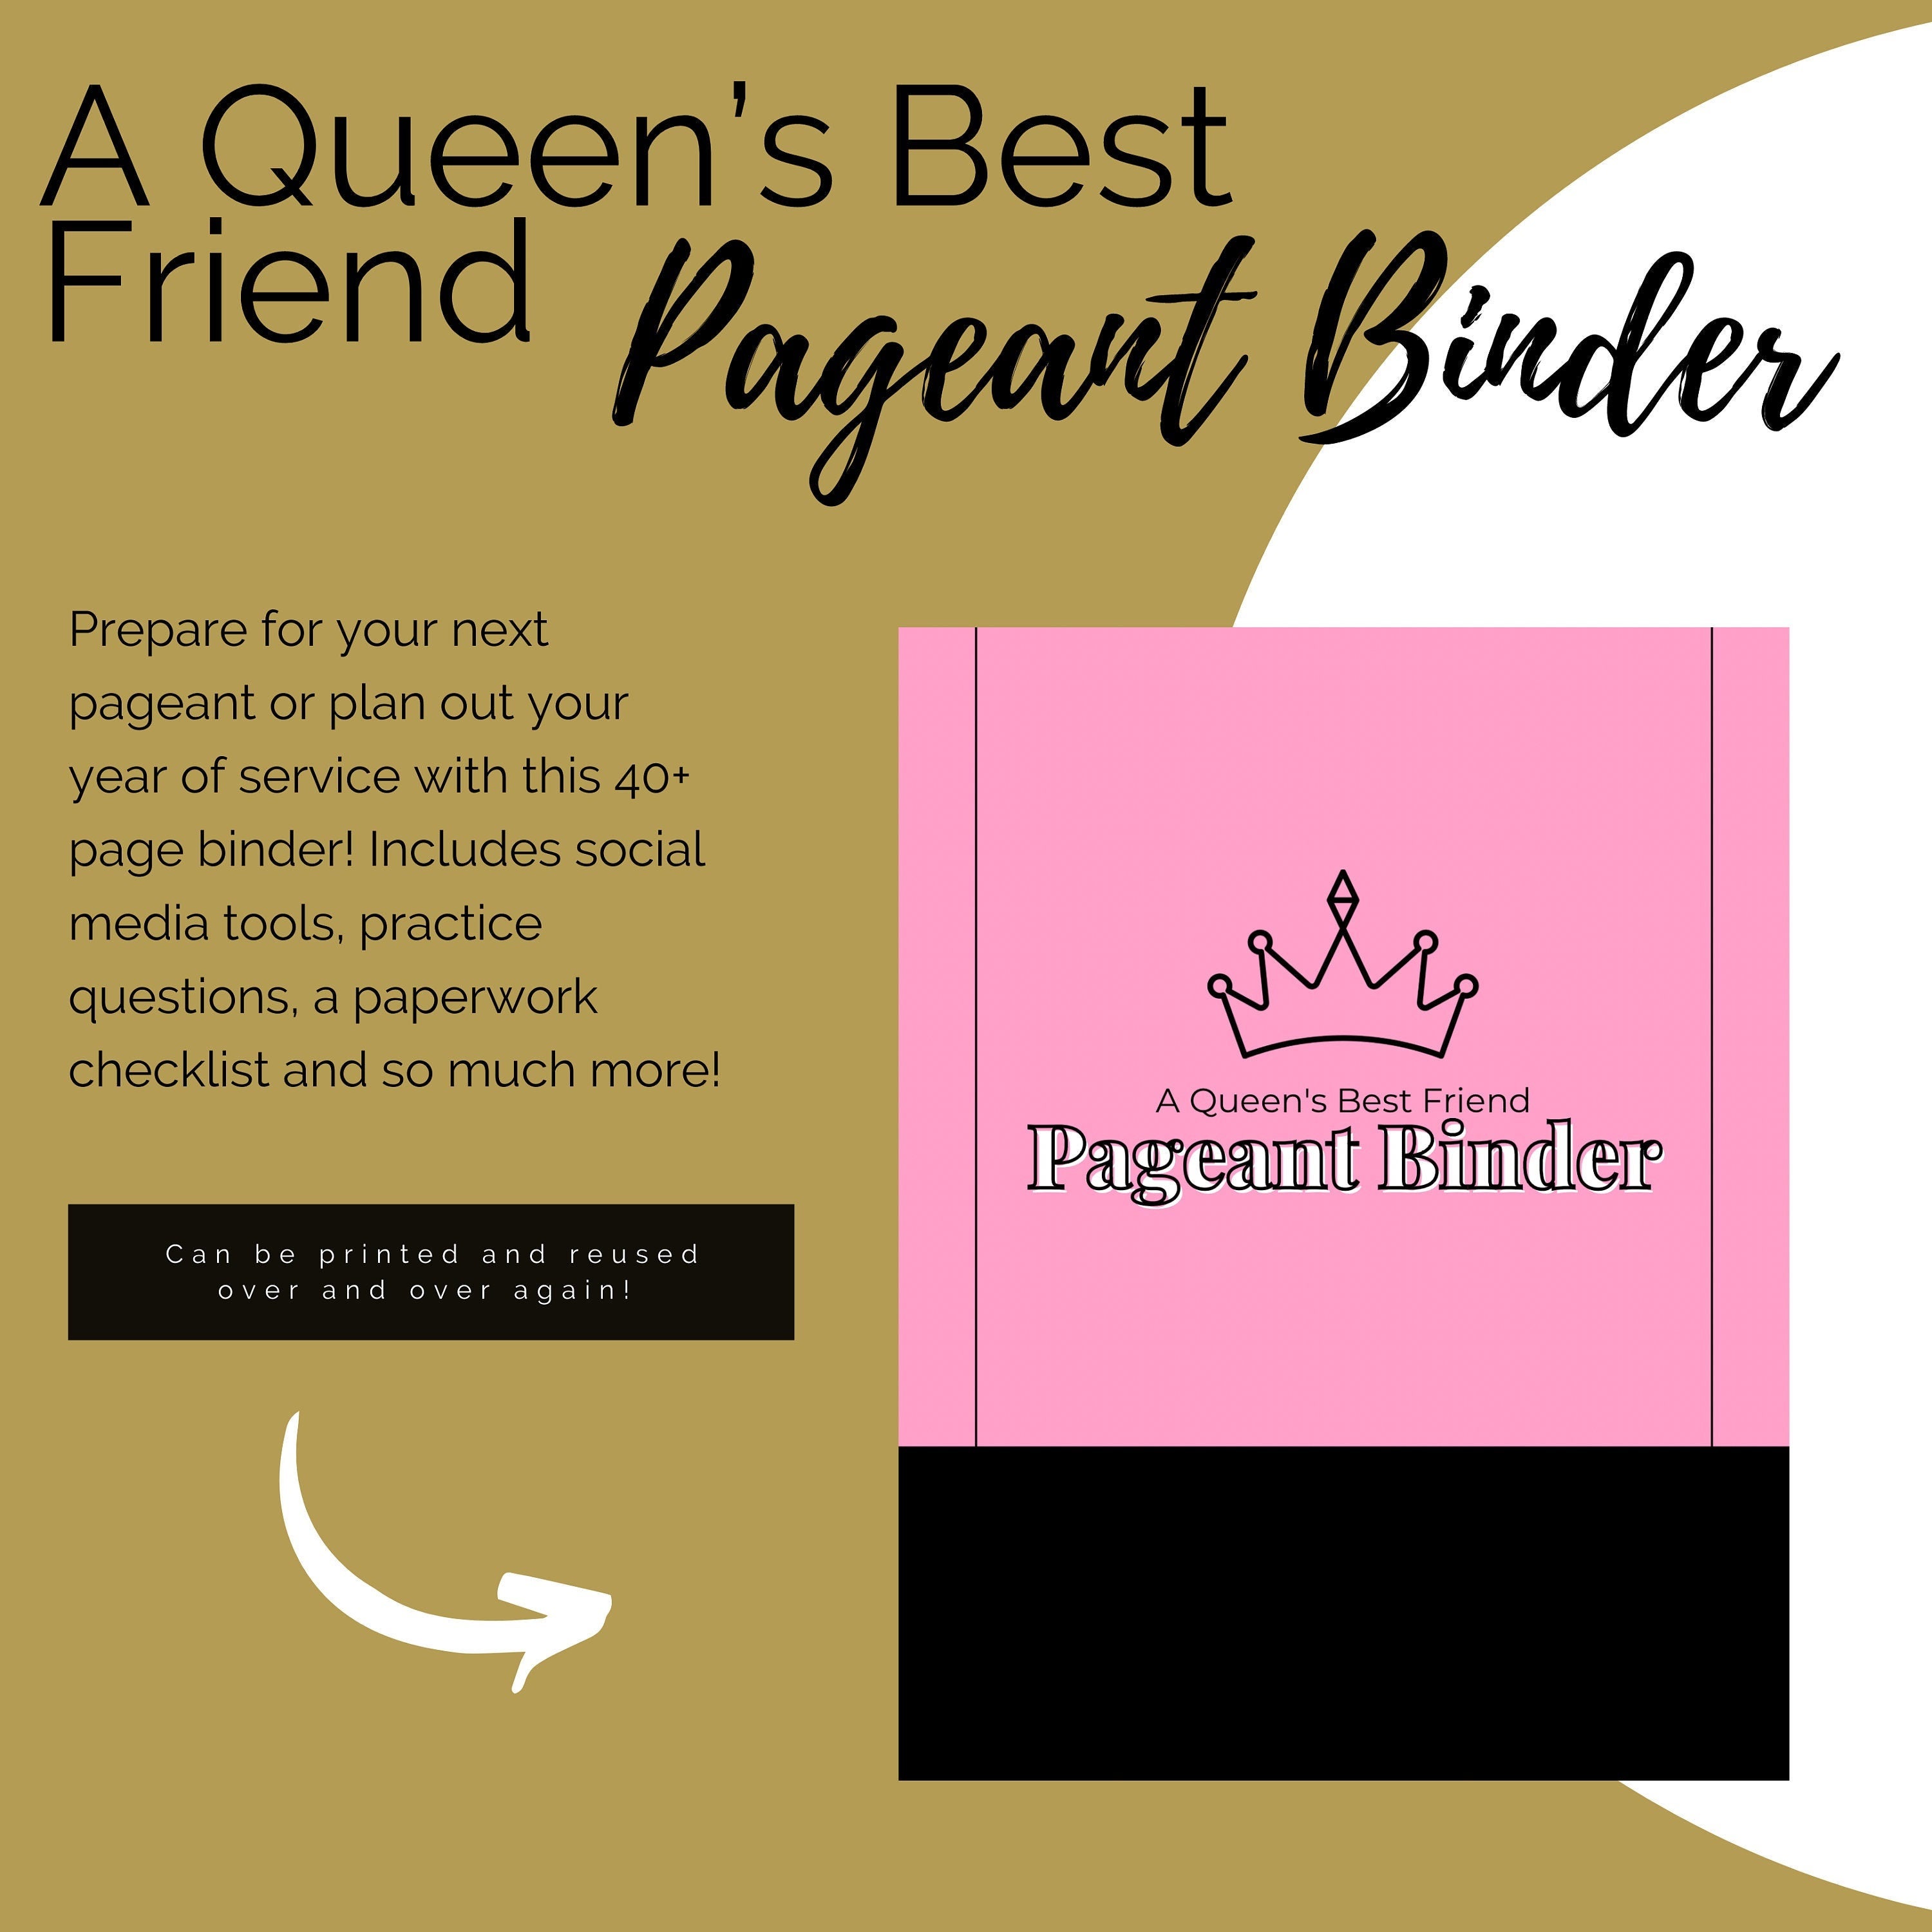 A Queen’s Best Friend Pageant Binder